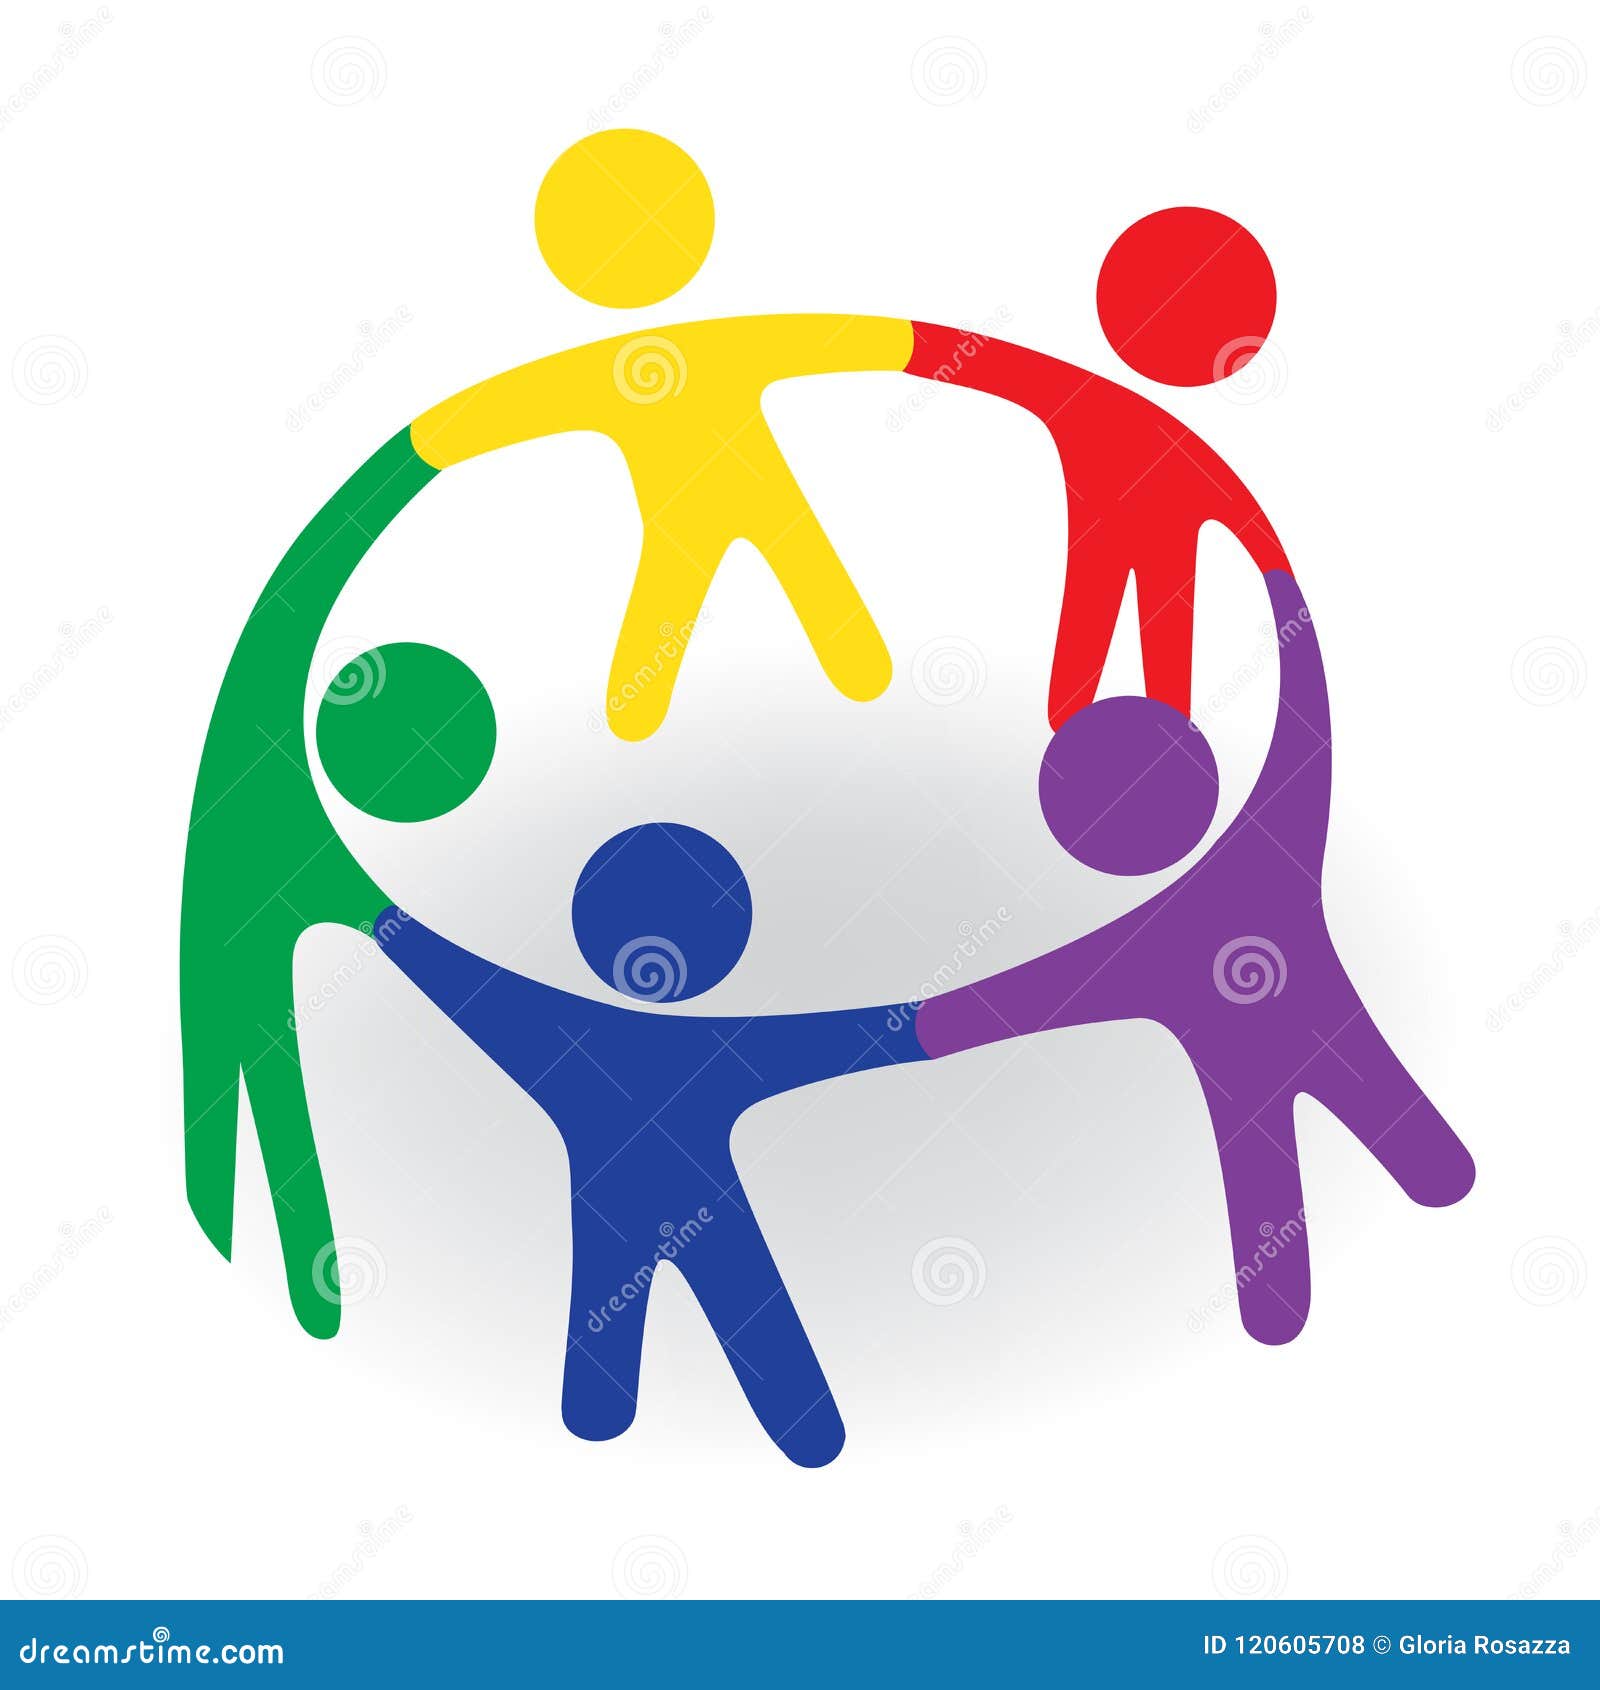 logo teamwork hug friendship unity meeting business colorful people icon logotype 